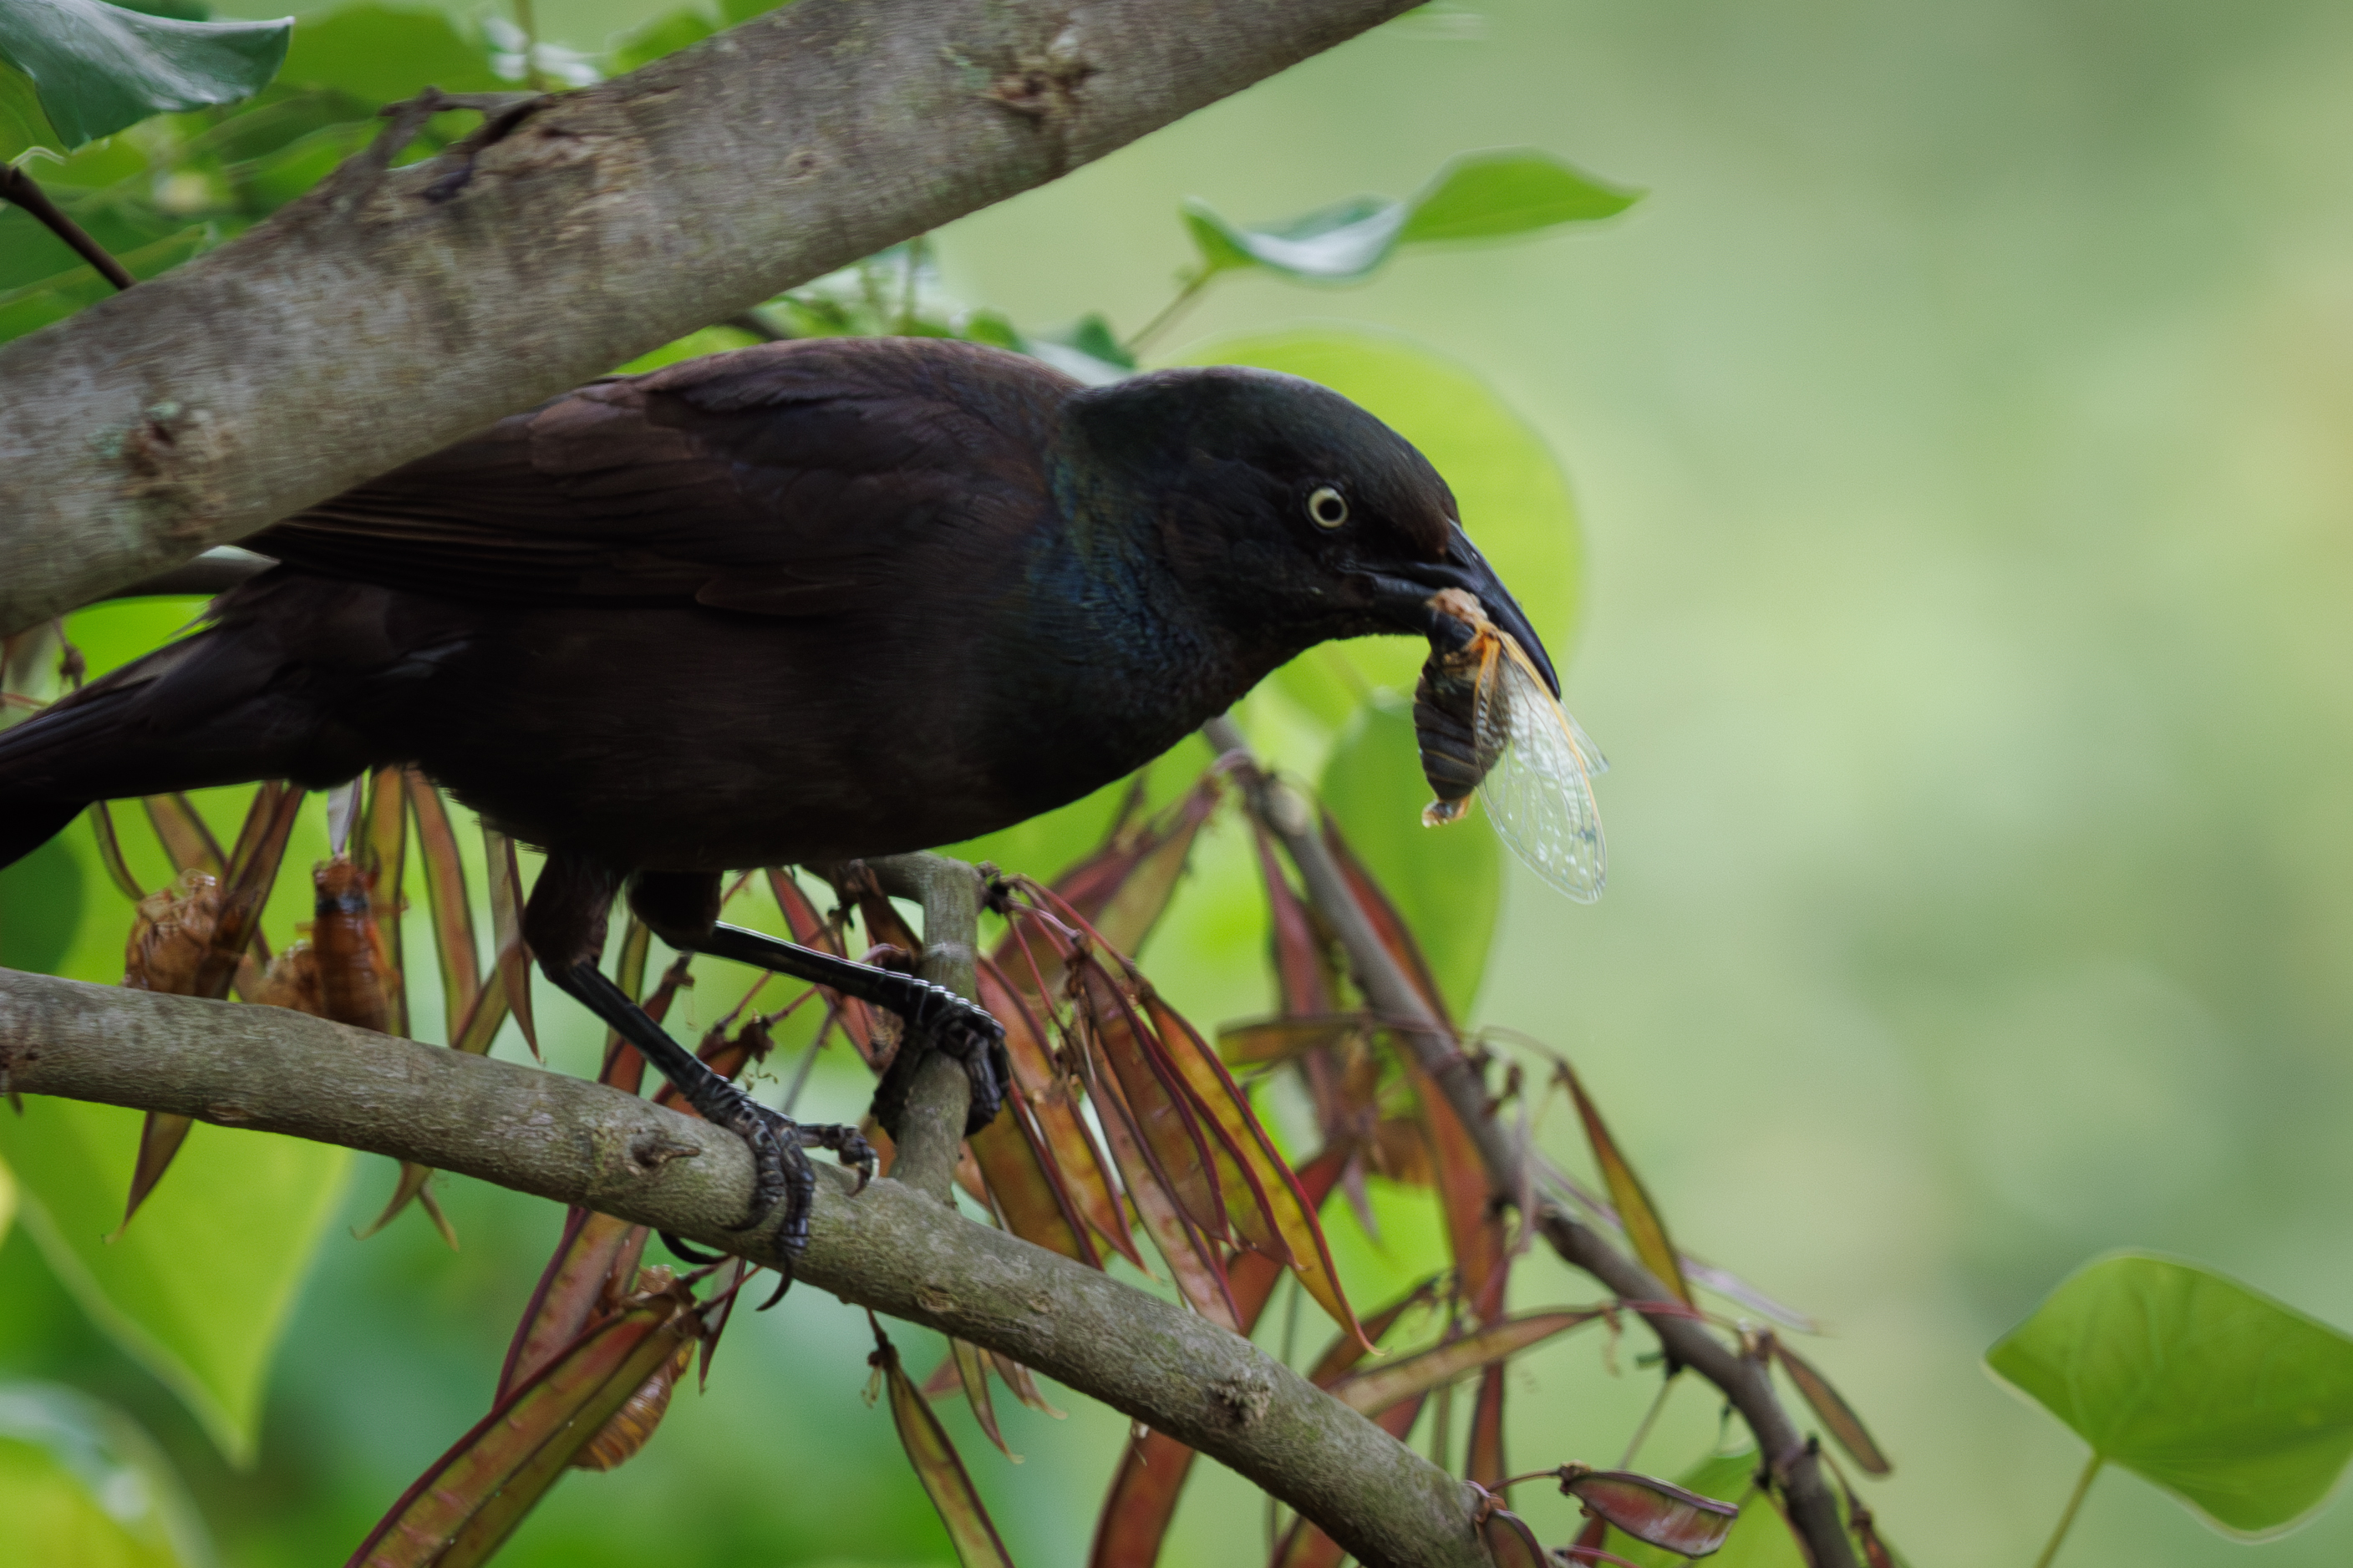 A black grackle bird on a tree branch eating a cicada